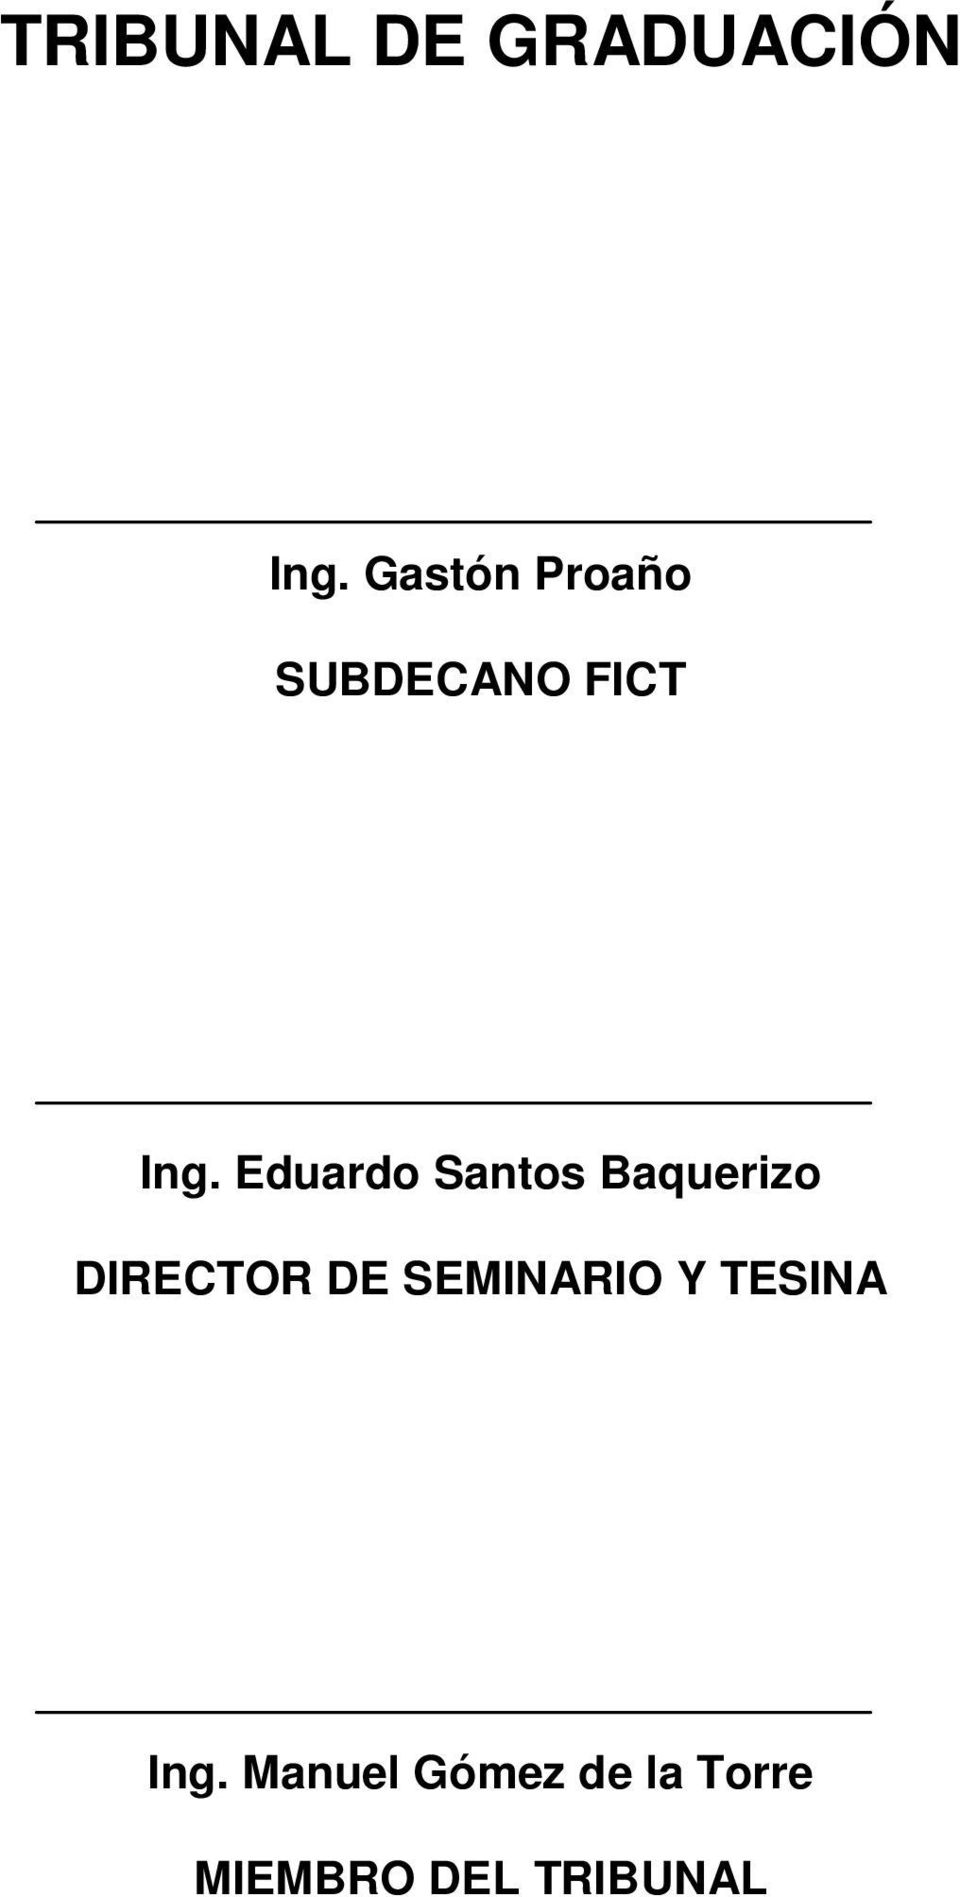 Eduardo Santos Baquerizo DIRECTOR DE